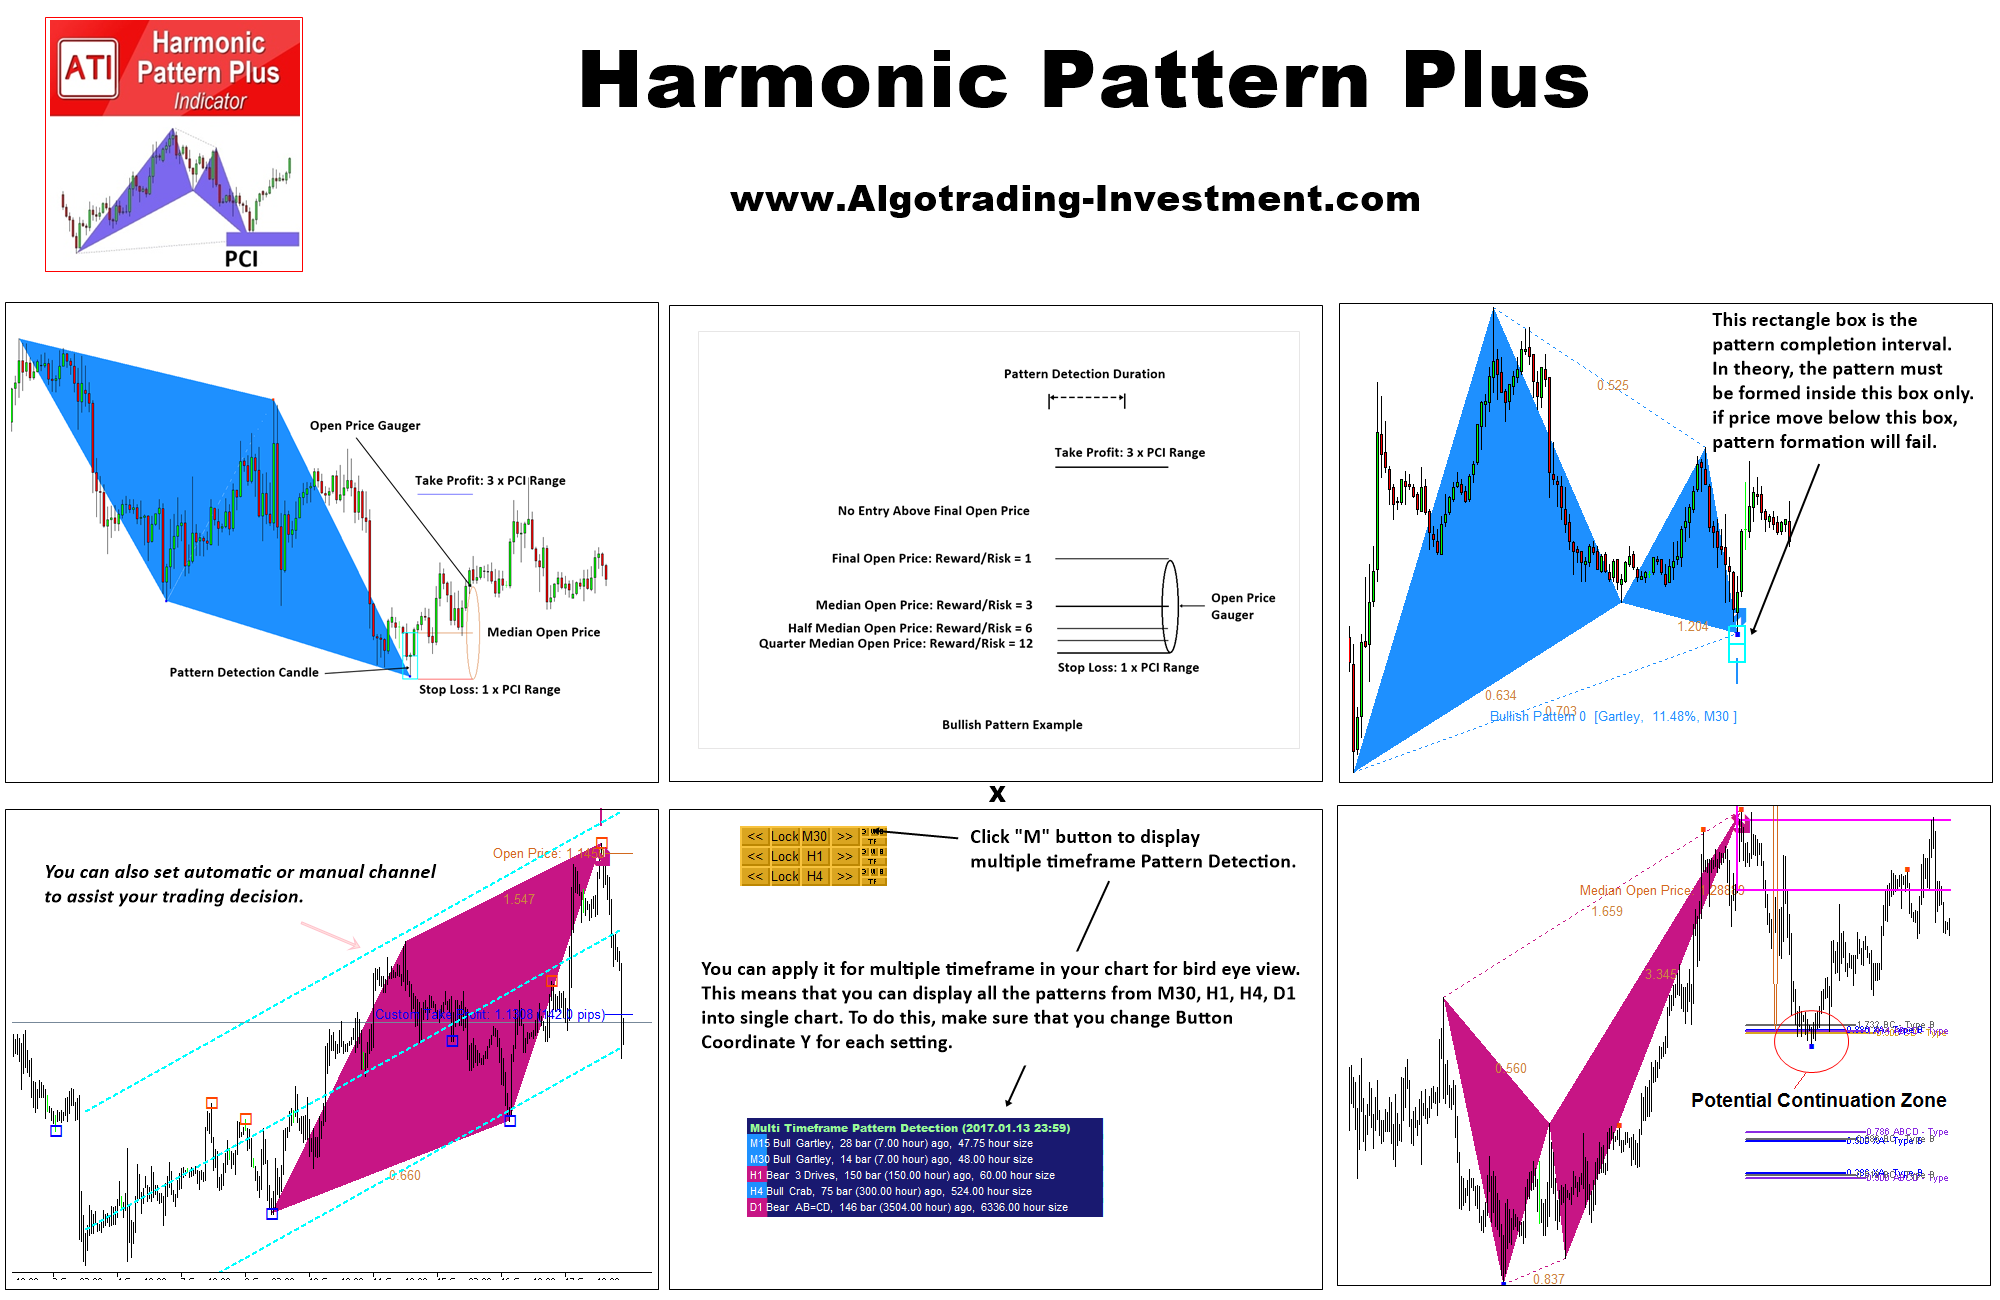 Harmonic Pattern Plus Introduction